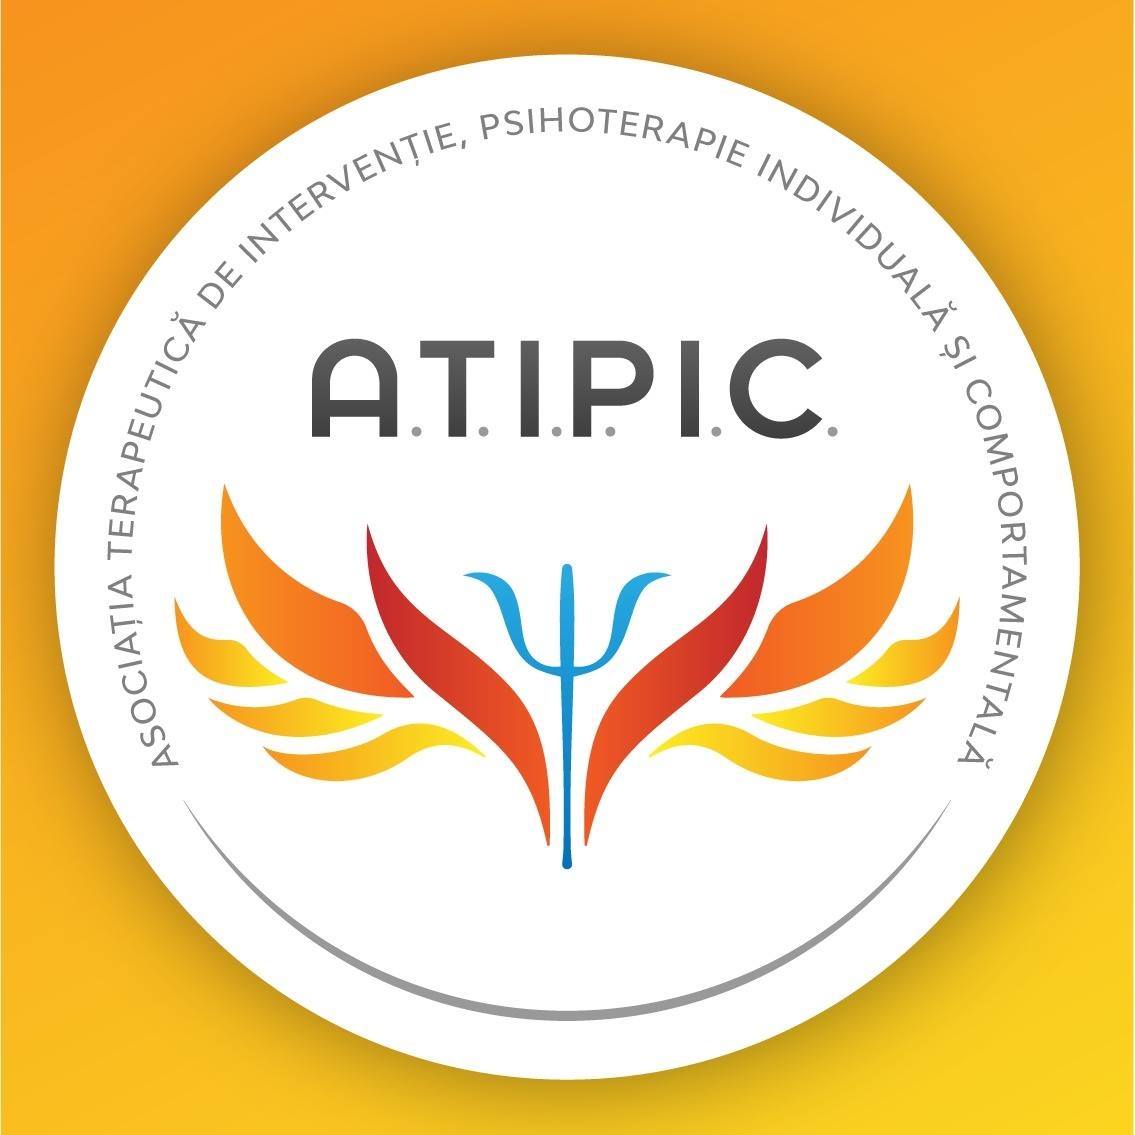 Asociatia Terapeutica de Interventie, Psihoterapie Individuala si Comportamentala - A.T.I.P.I.C. logo